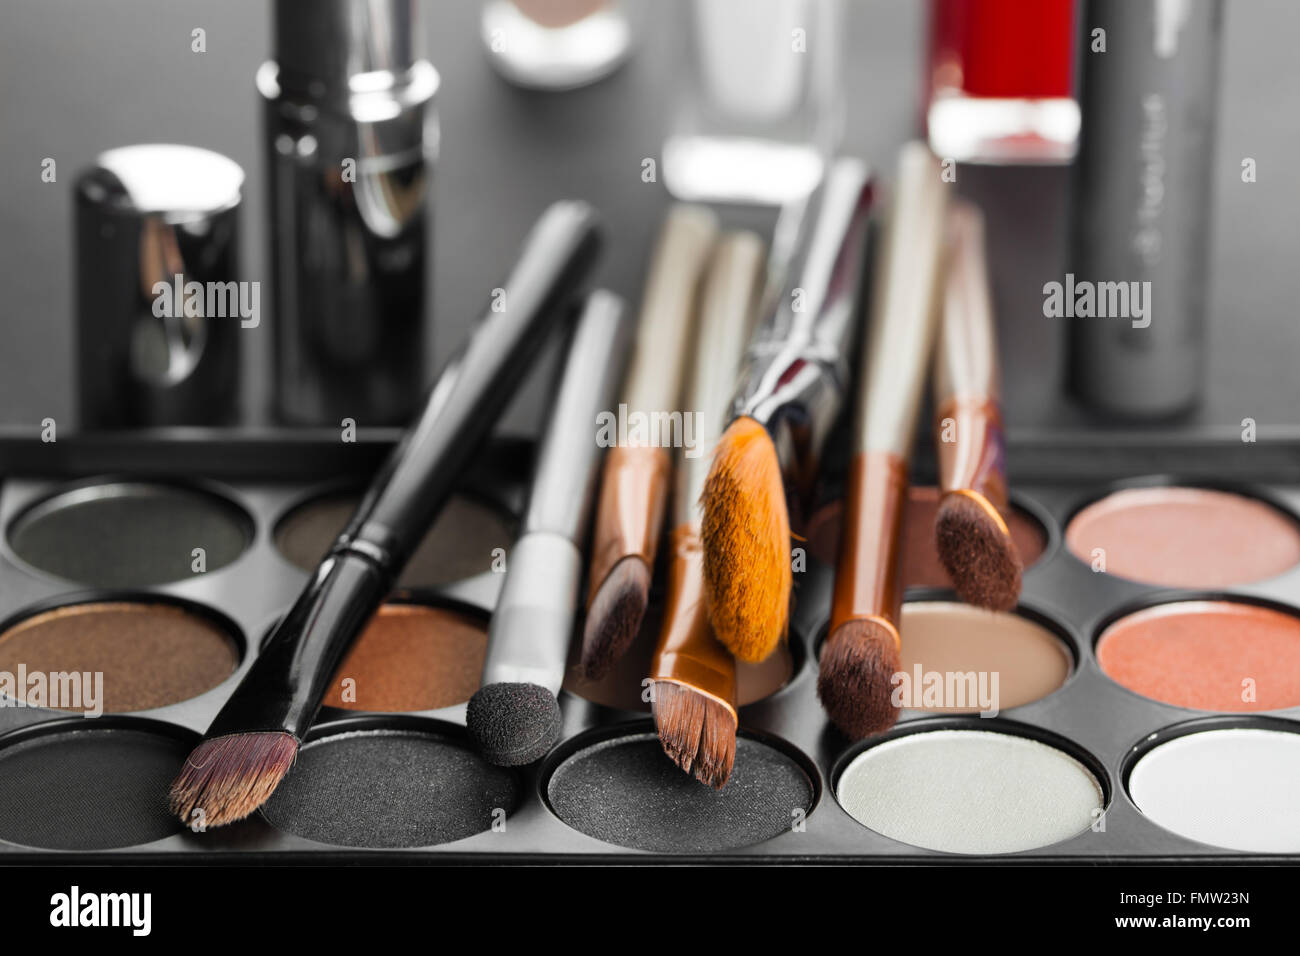 set of decorative cosmetics on a dark background Stock Photo